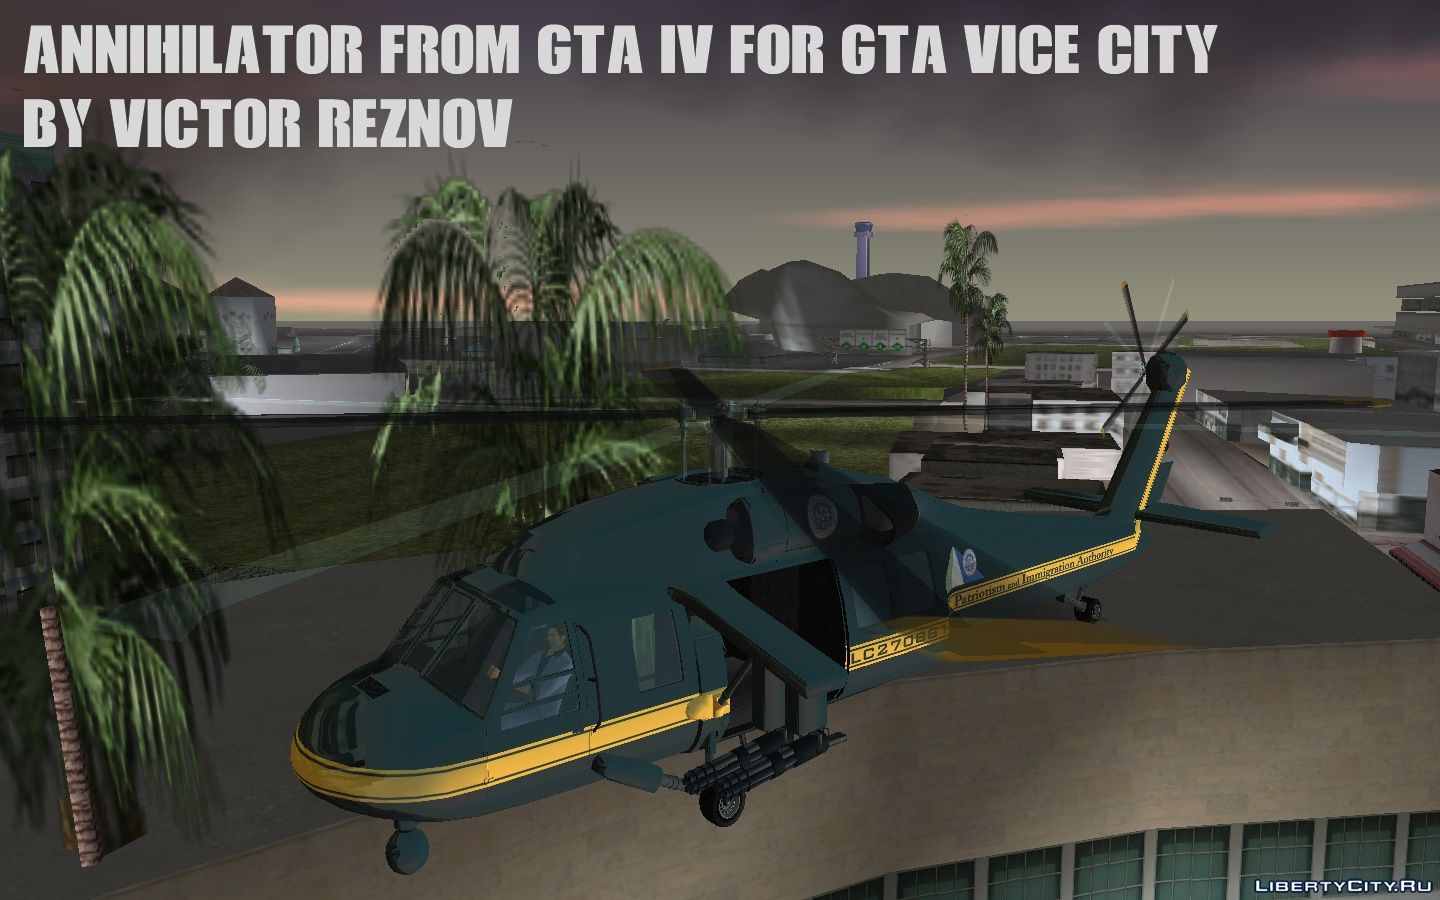 Код на самолет в гта сан. Annihilator вертолет ГТА. ГТА вай Сити вертолет. ГТА Вайс Сити вертолет. Вертолет из ГТА Вайс Сити.